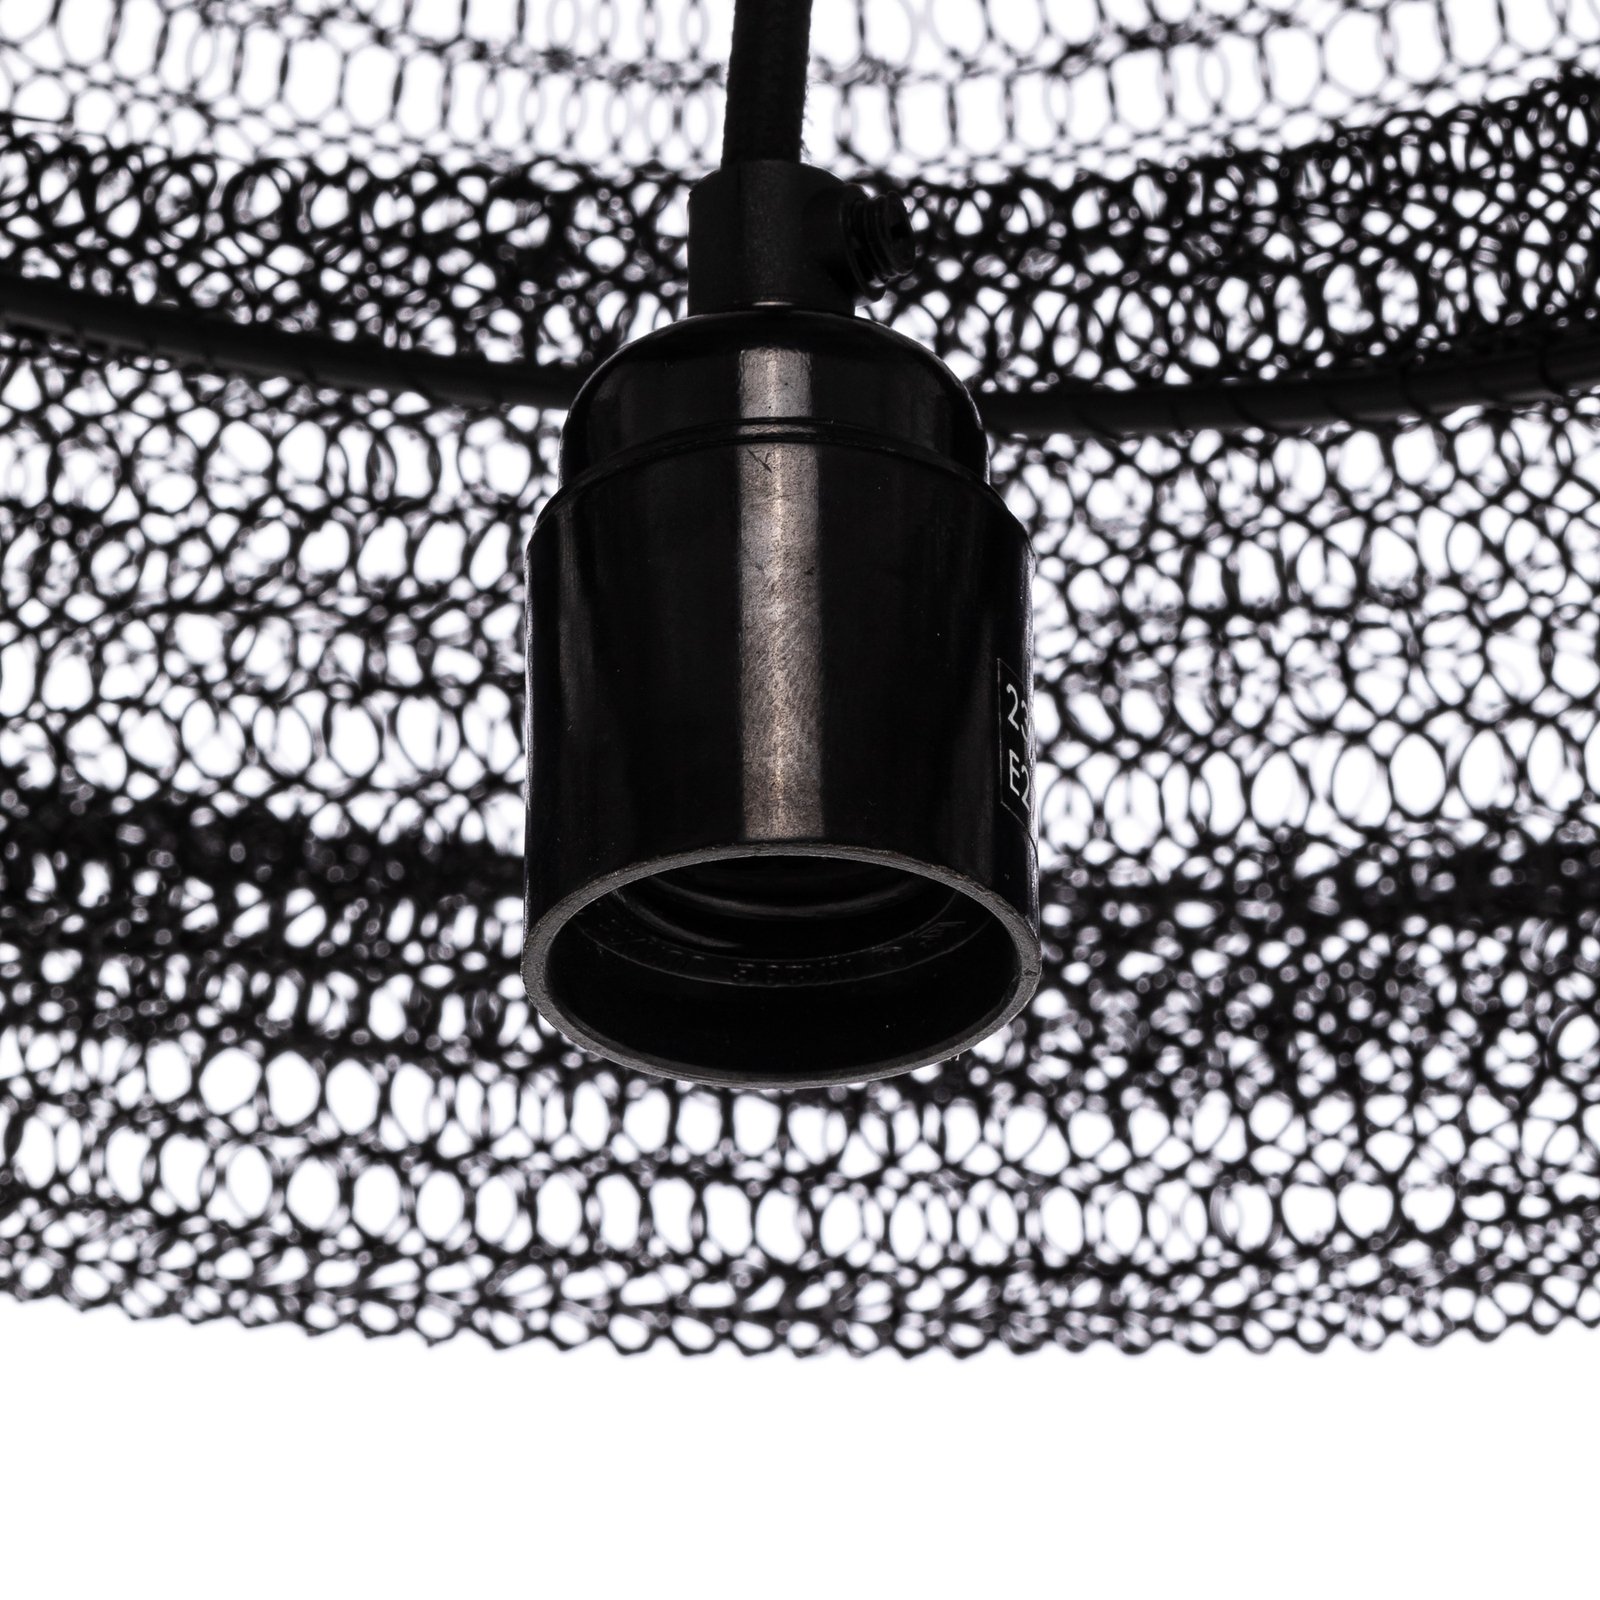 Lindby pendant light Eldric, black, iron, Ø 45 cm